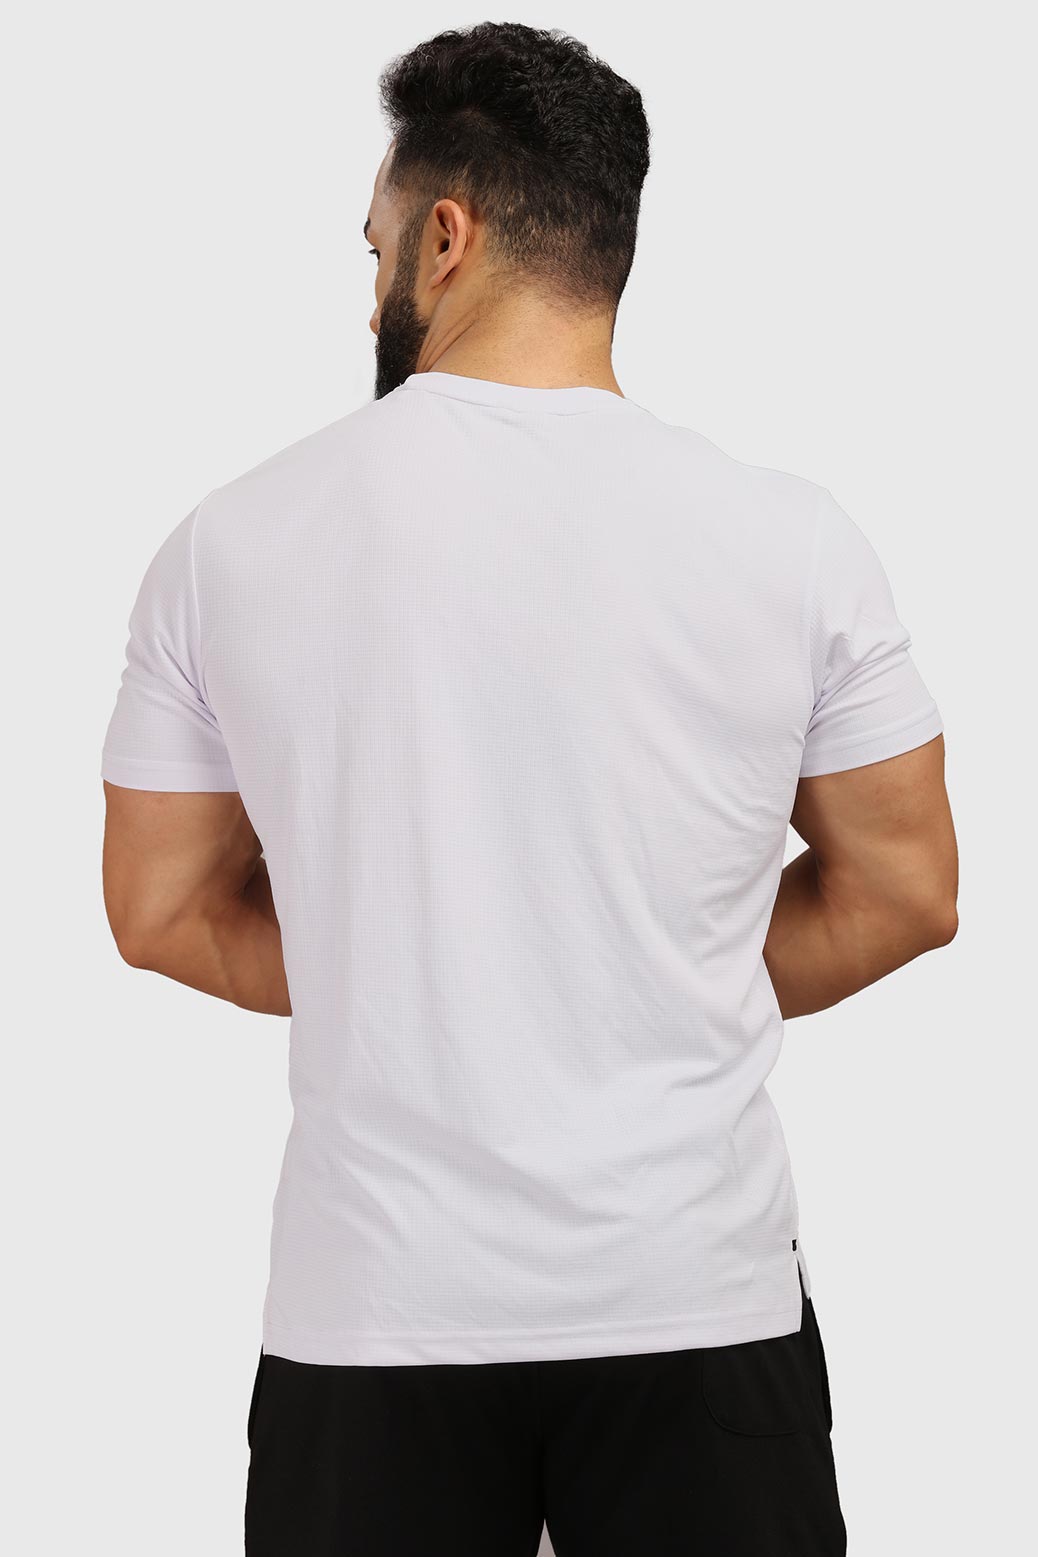 Fuaark Checks Regular White Tshirt